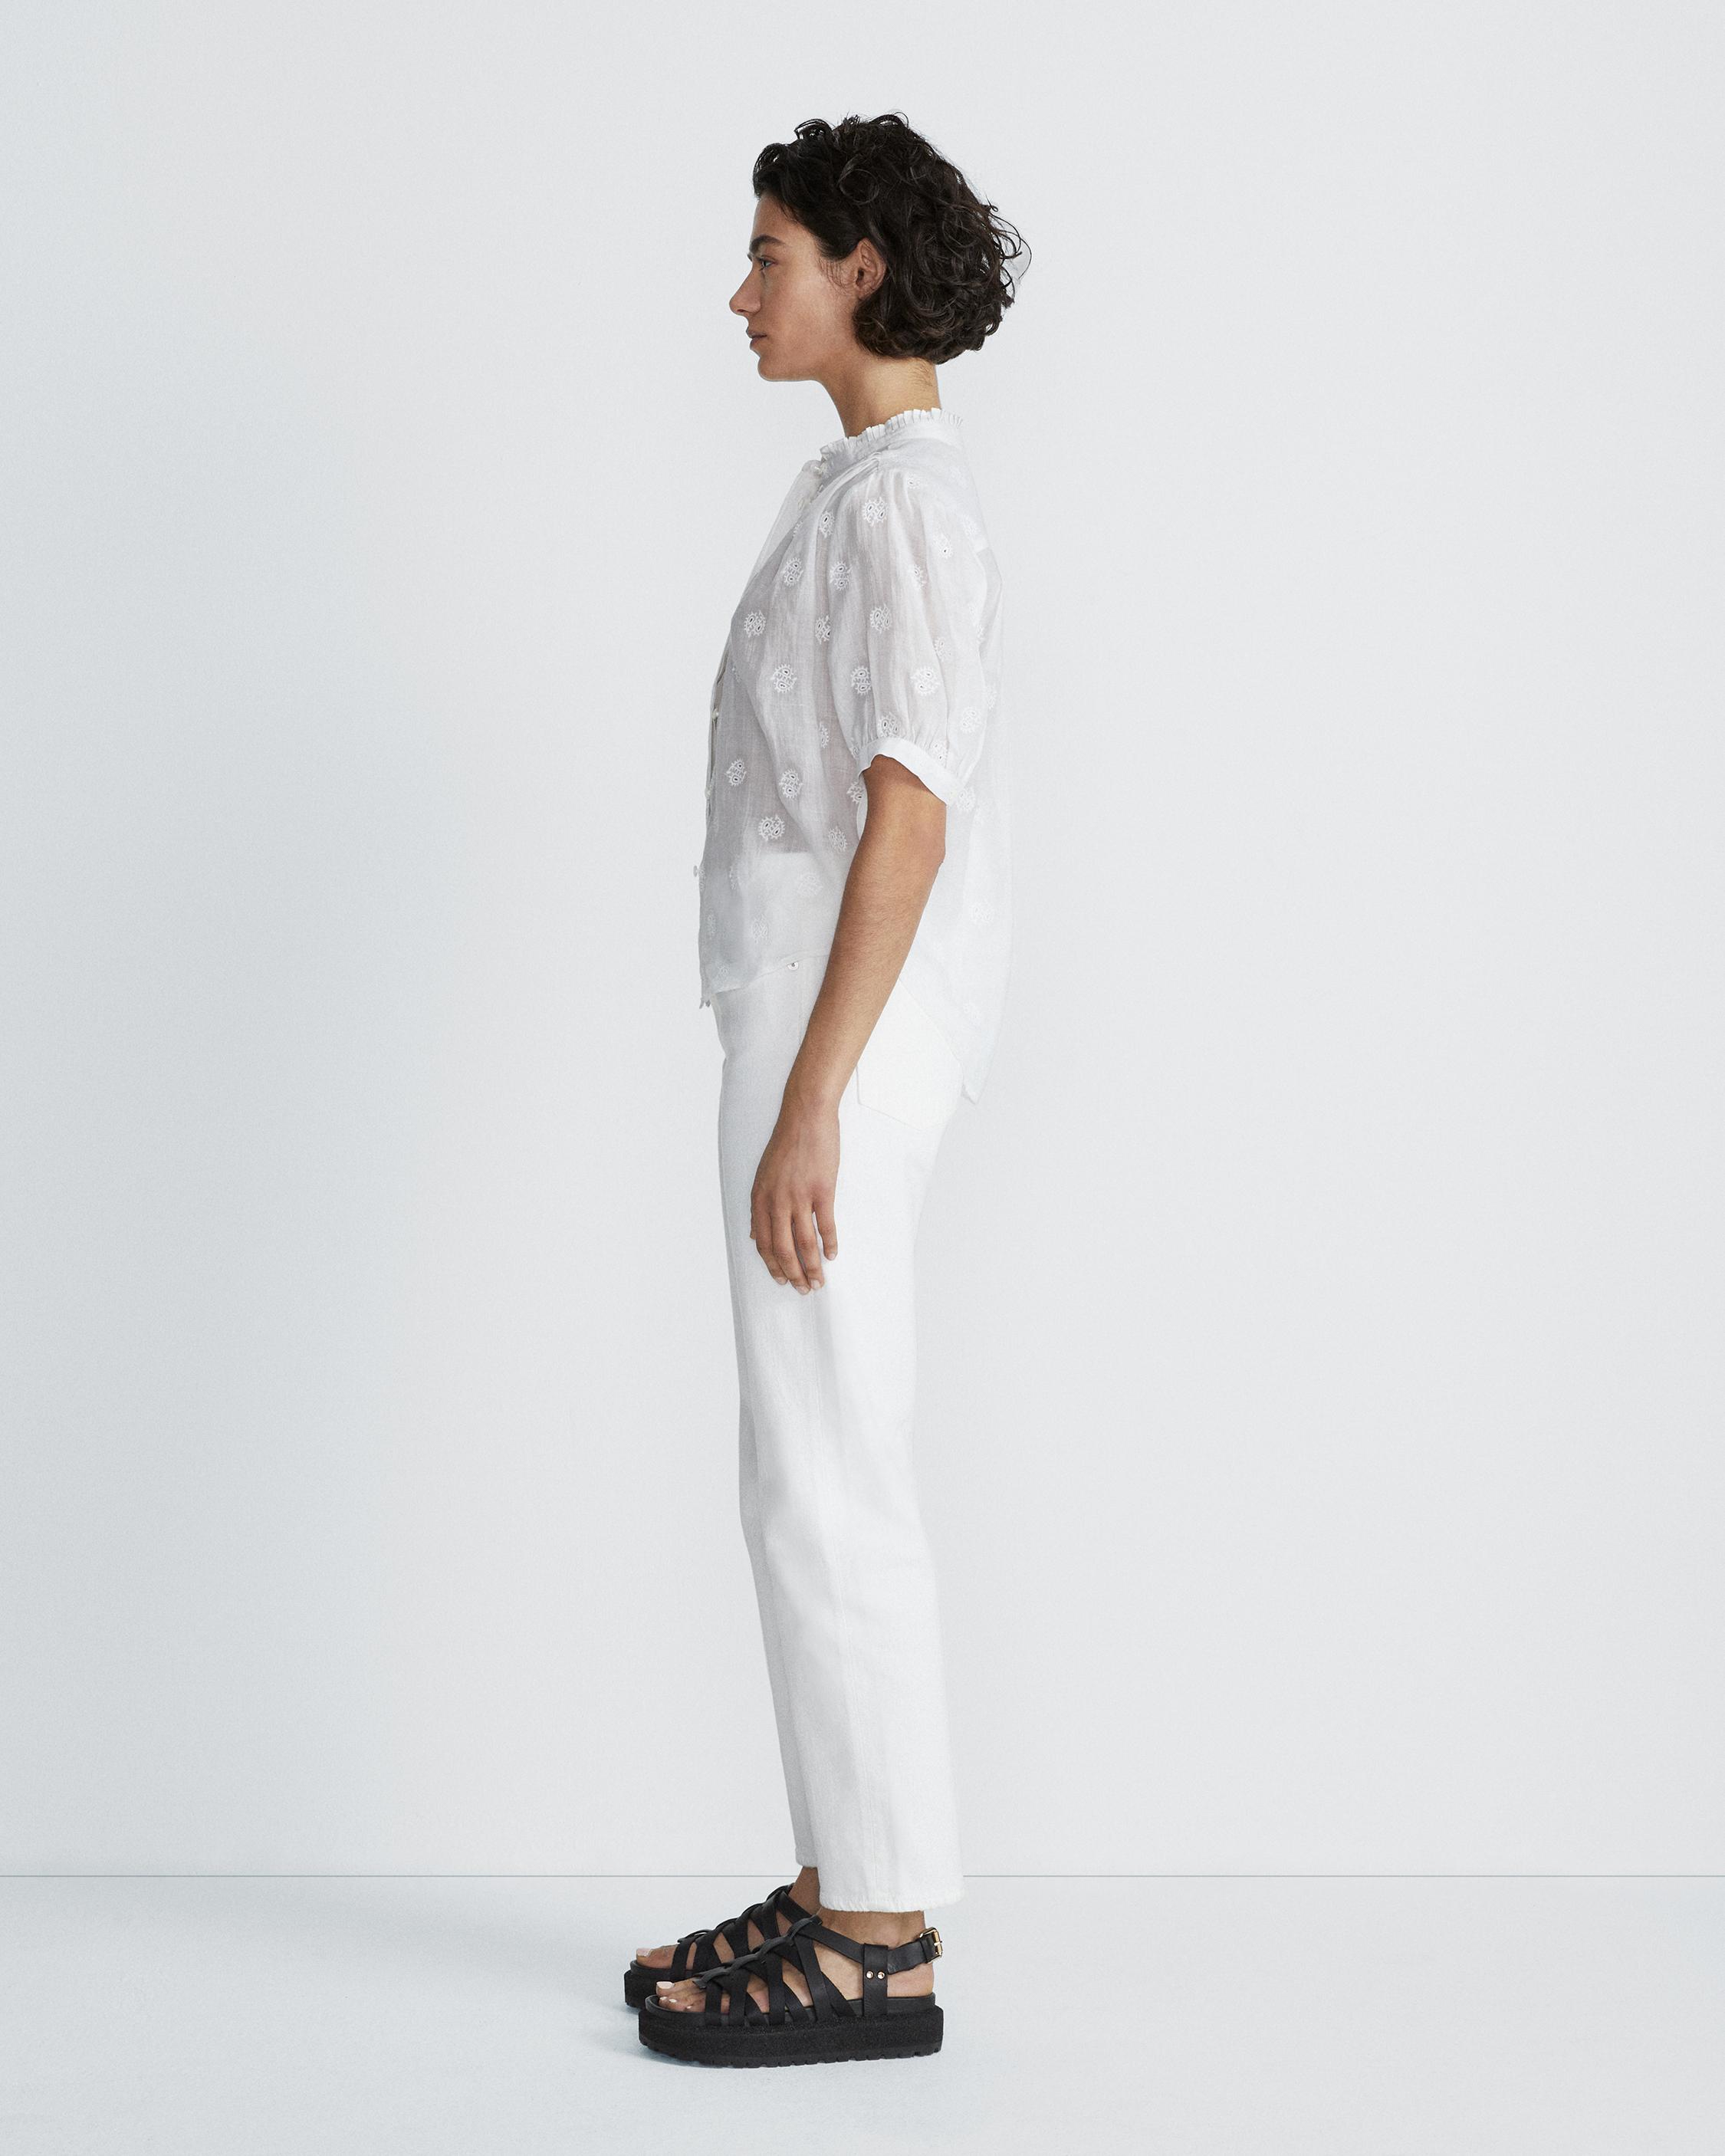 Zara NWT embroidered white and black linen, straight leg pants